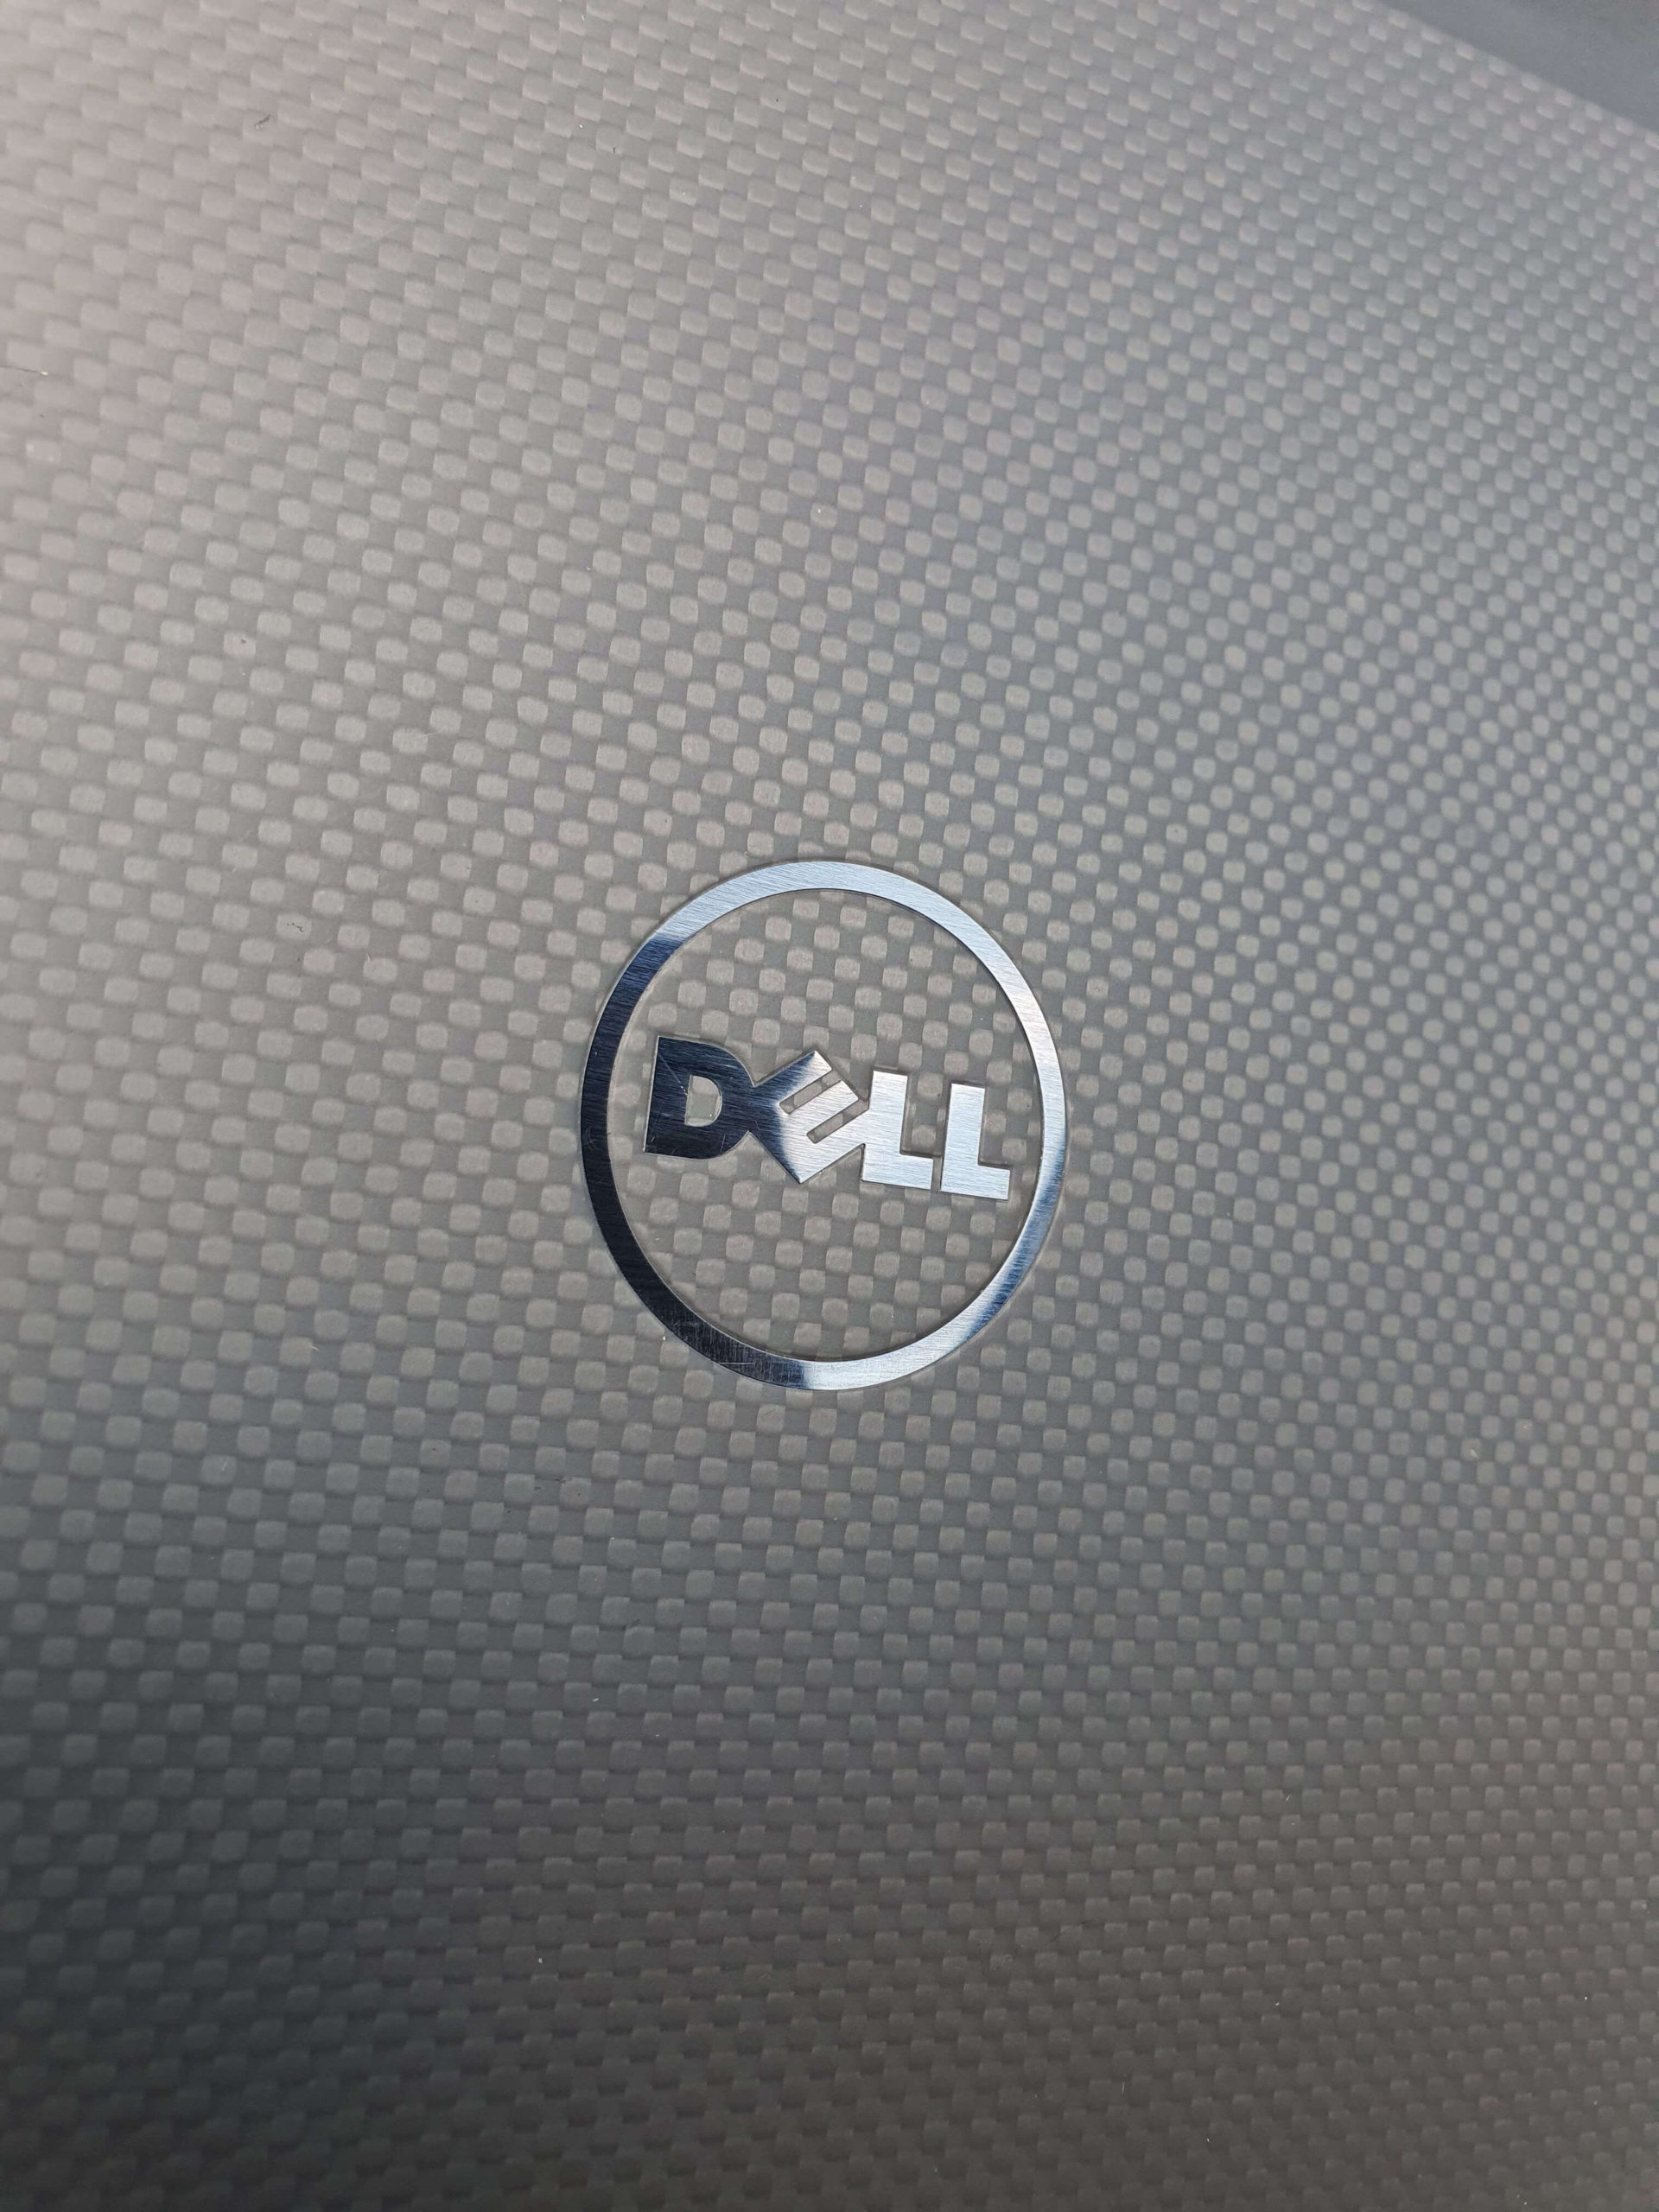 Dell Precision 7520 Mobile Workstation i7 7700hq 16 1tb m1200 resize (9)